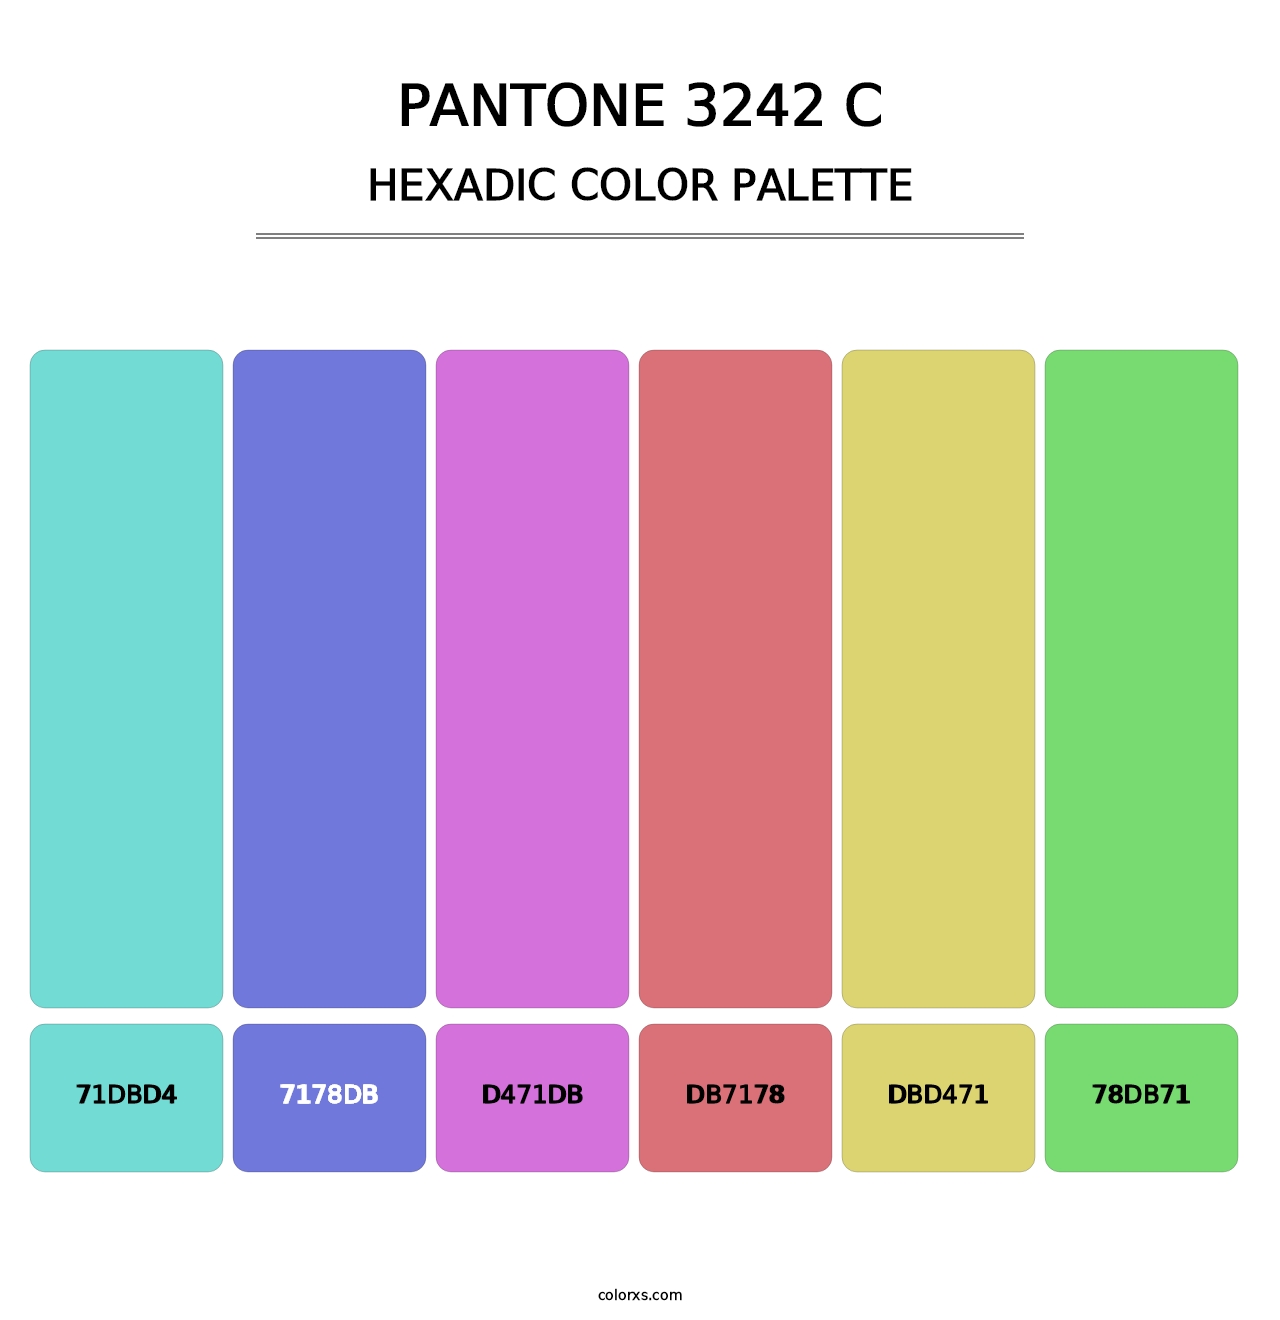 PANTONE 3242 C - Hexadic Color Palette